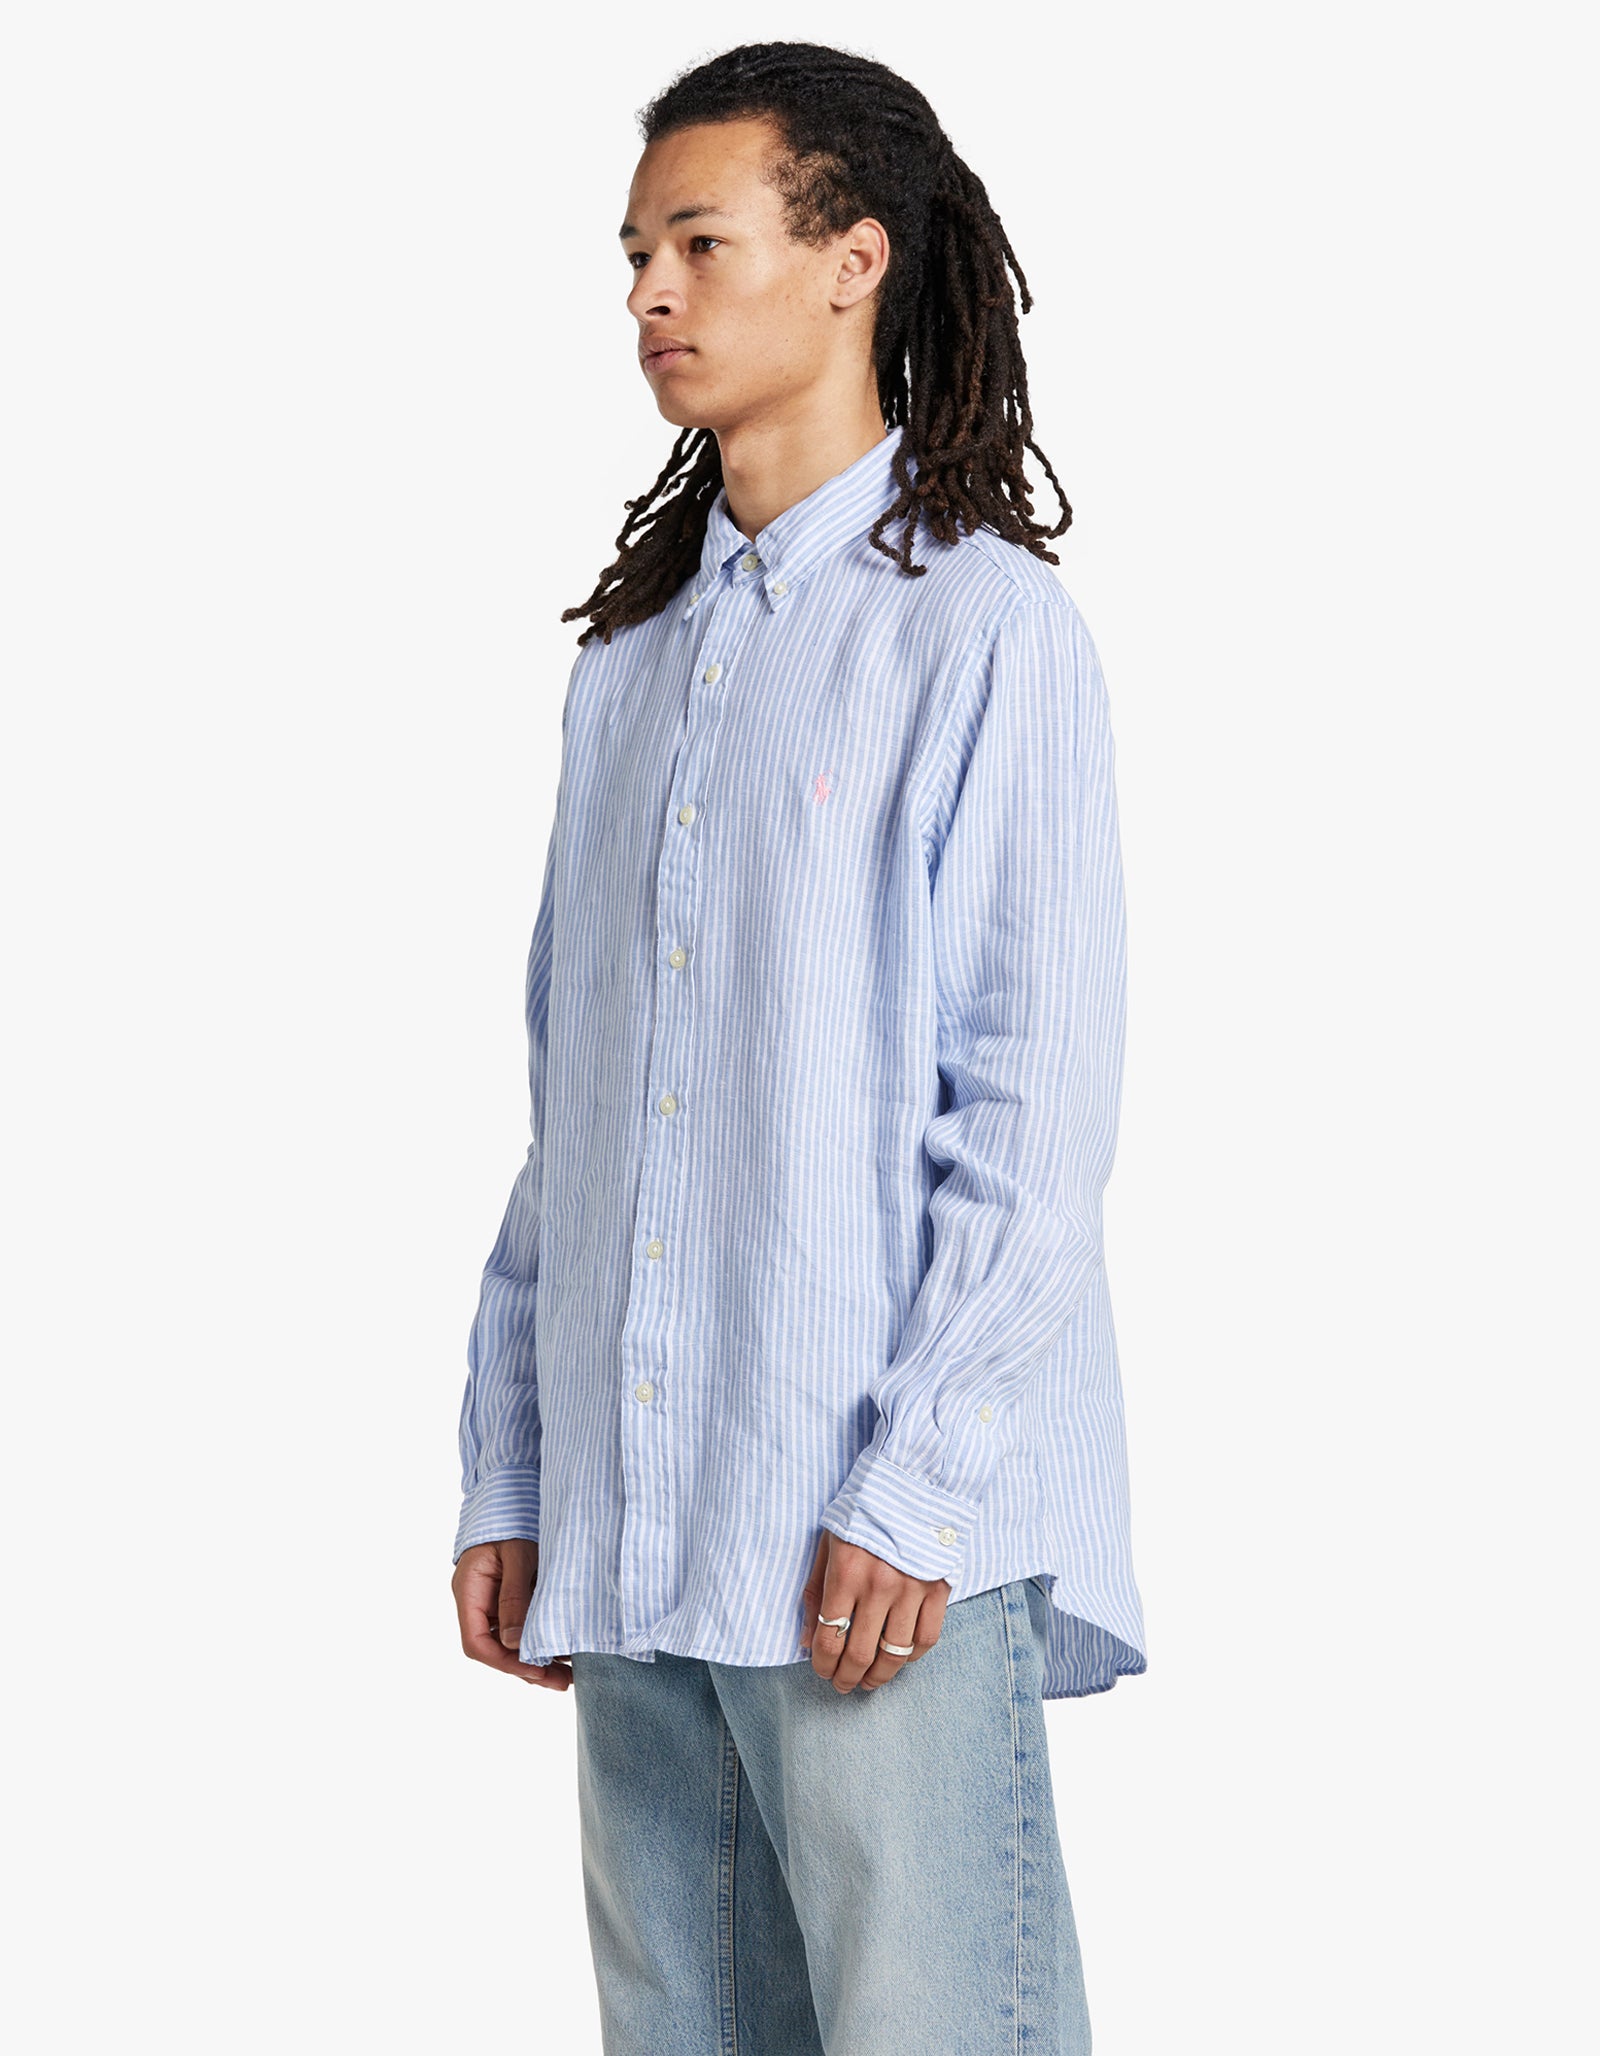 Superette | Custom Fit Long Sleeve Sport Shirt - 3334A Blue/White